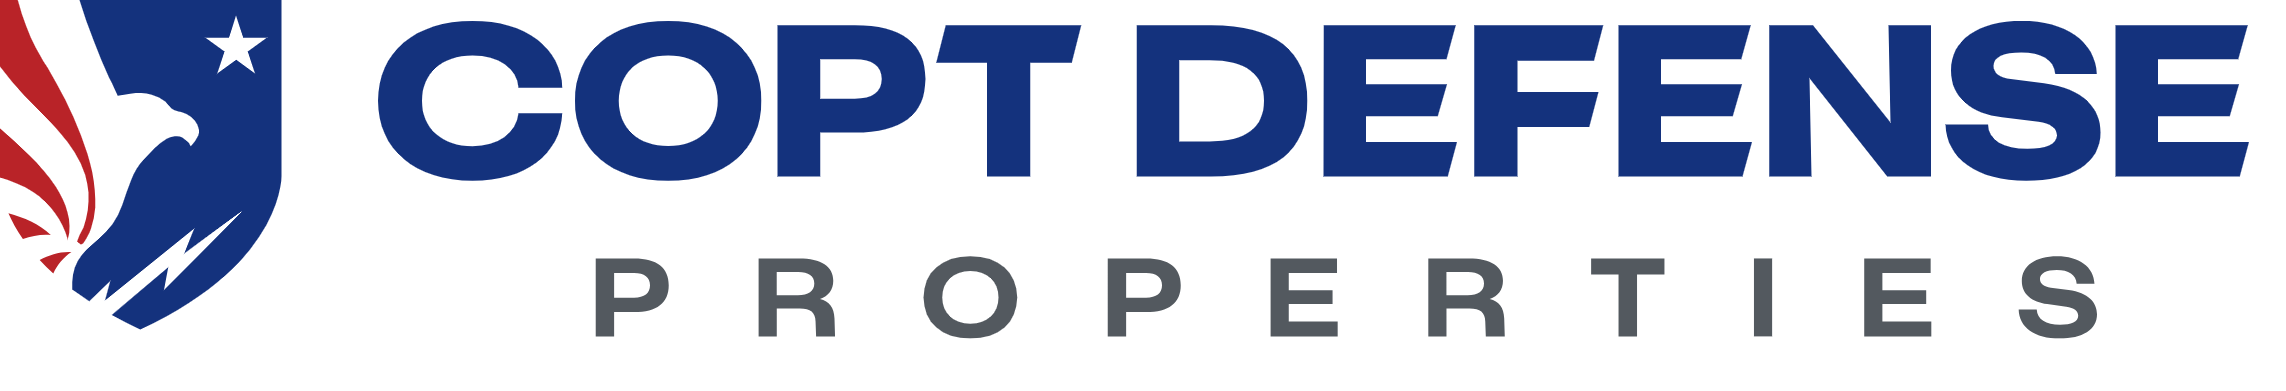 COPT Defense Properties Company Logo